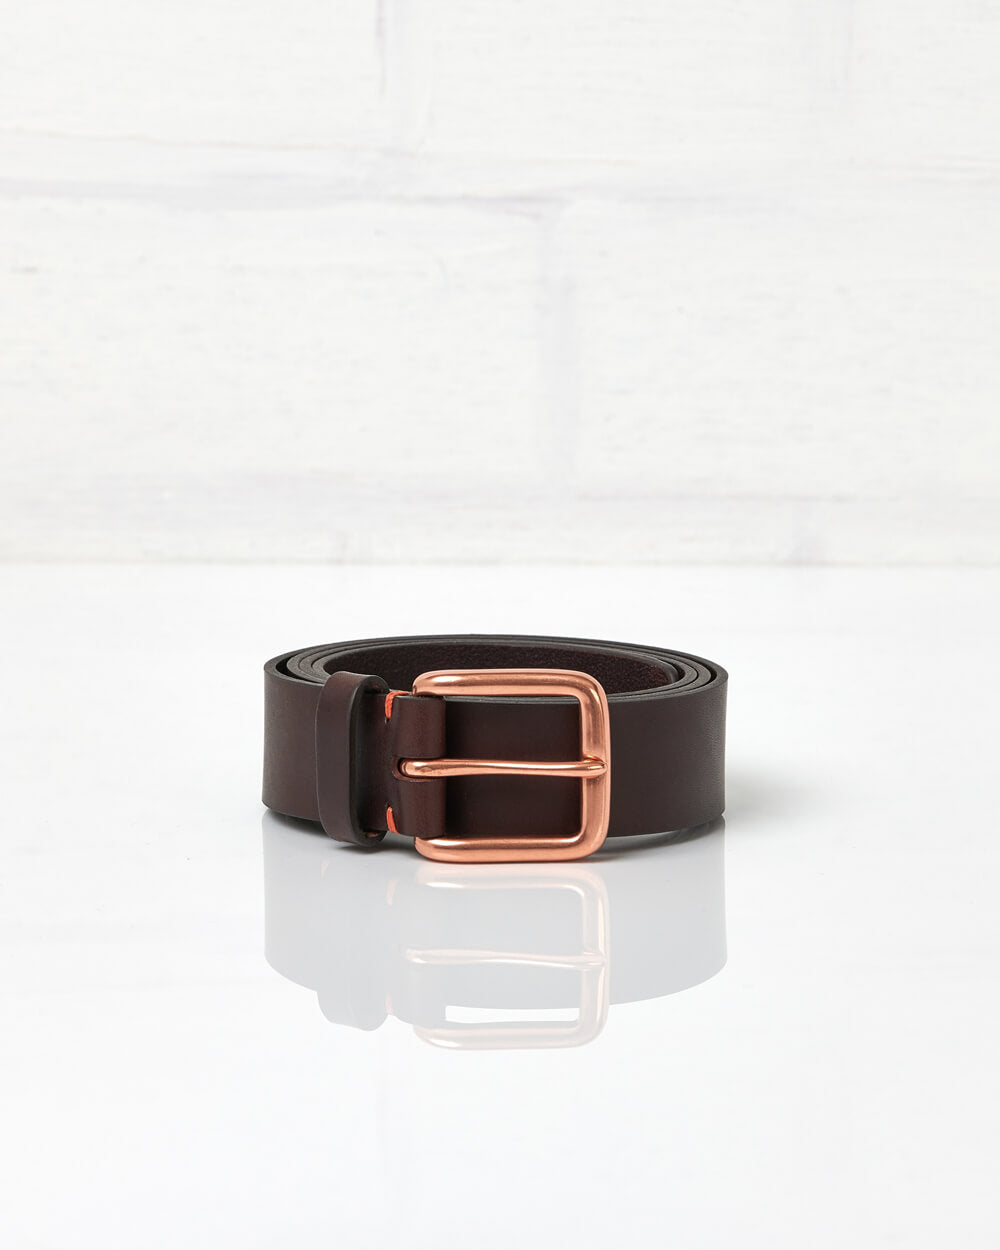 Modernist Belt - Walnut Brown / Copper